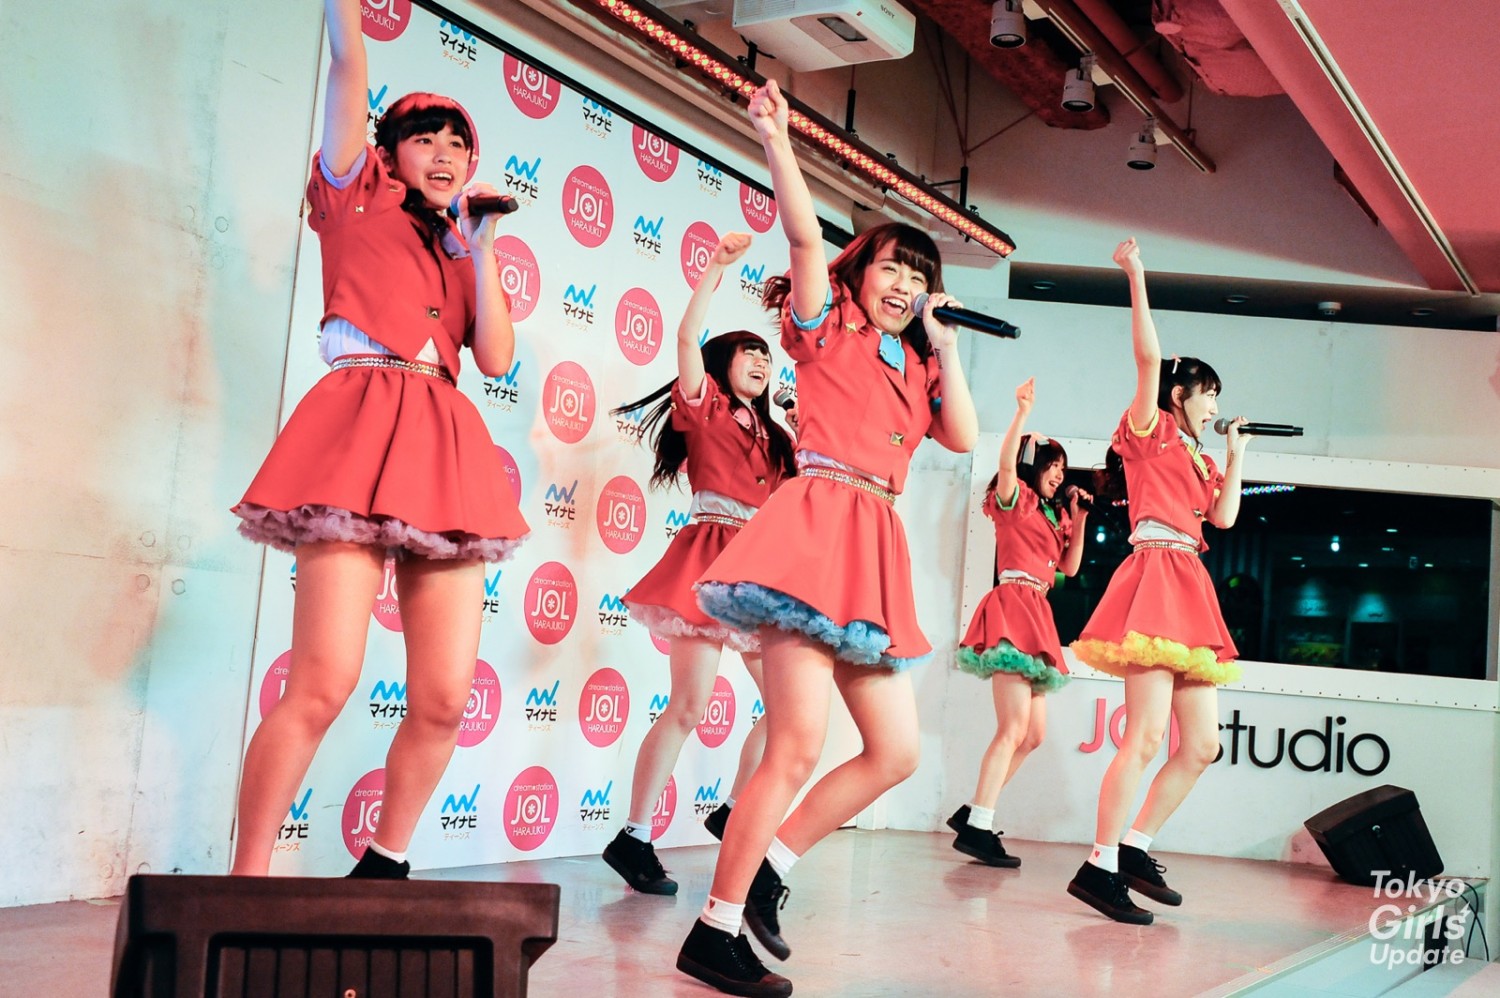 Senkou Roadshow, Soon to Make their Major Debut, Showcases a Unique “Girls’” World at JOL Harajuku